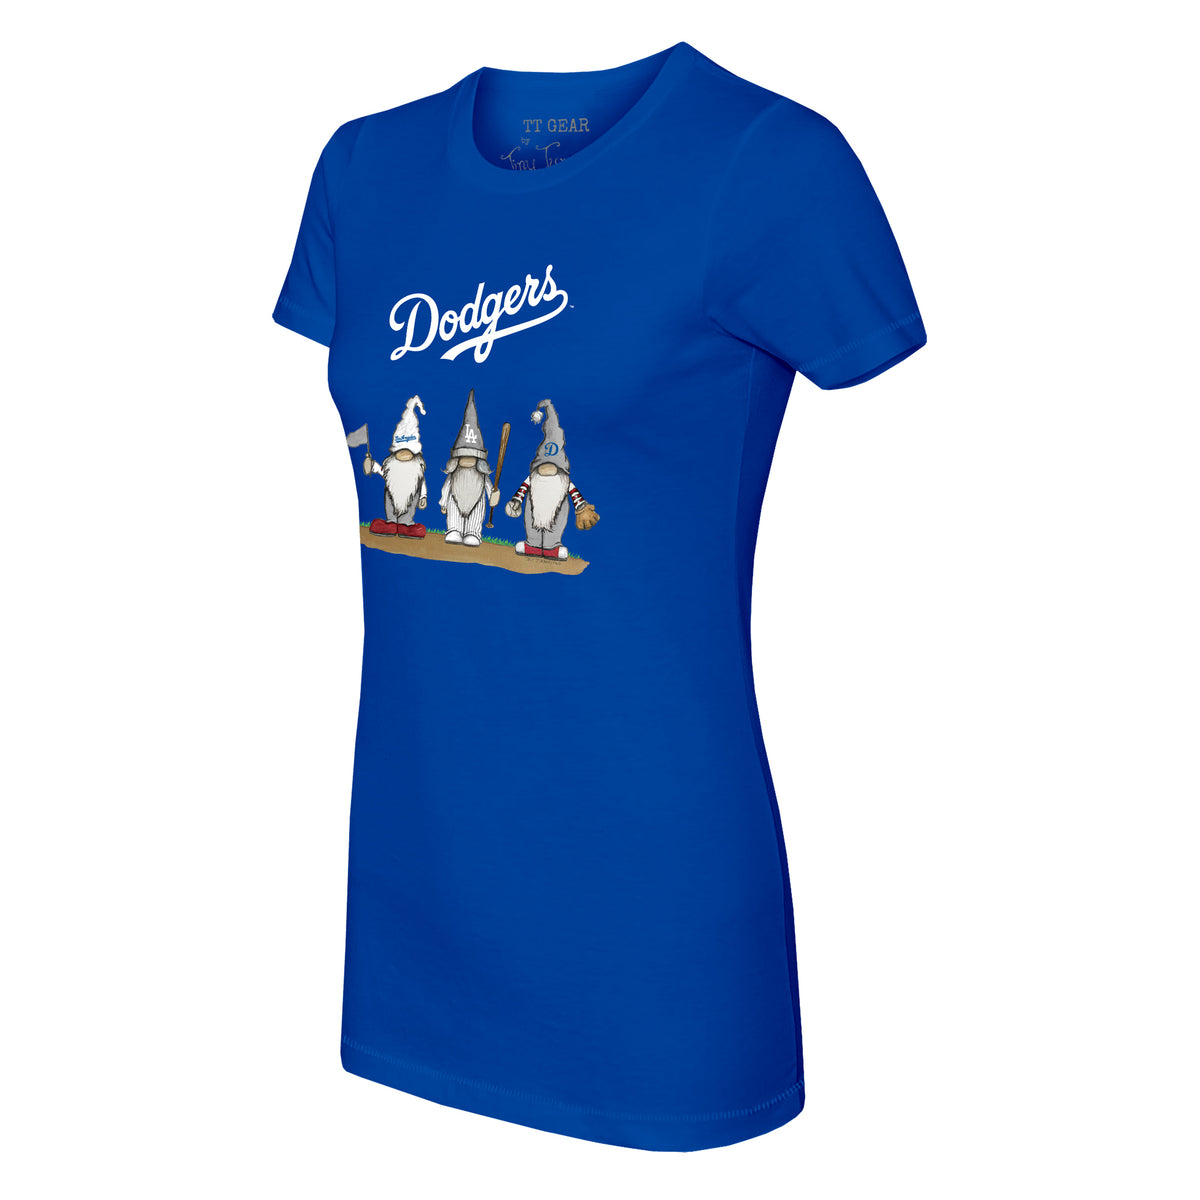 Los Angeles Dodgers Gnomes Tee Shirt